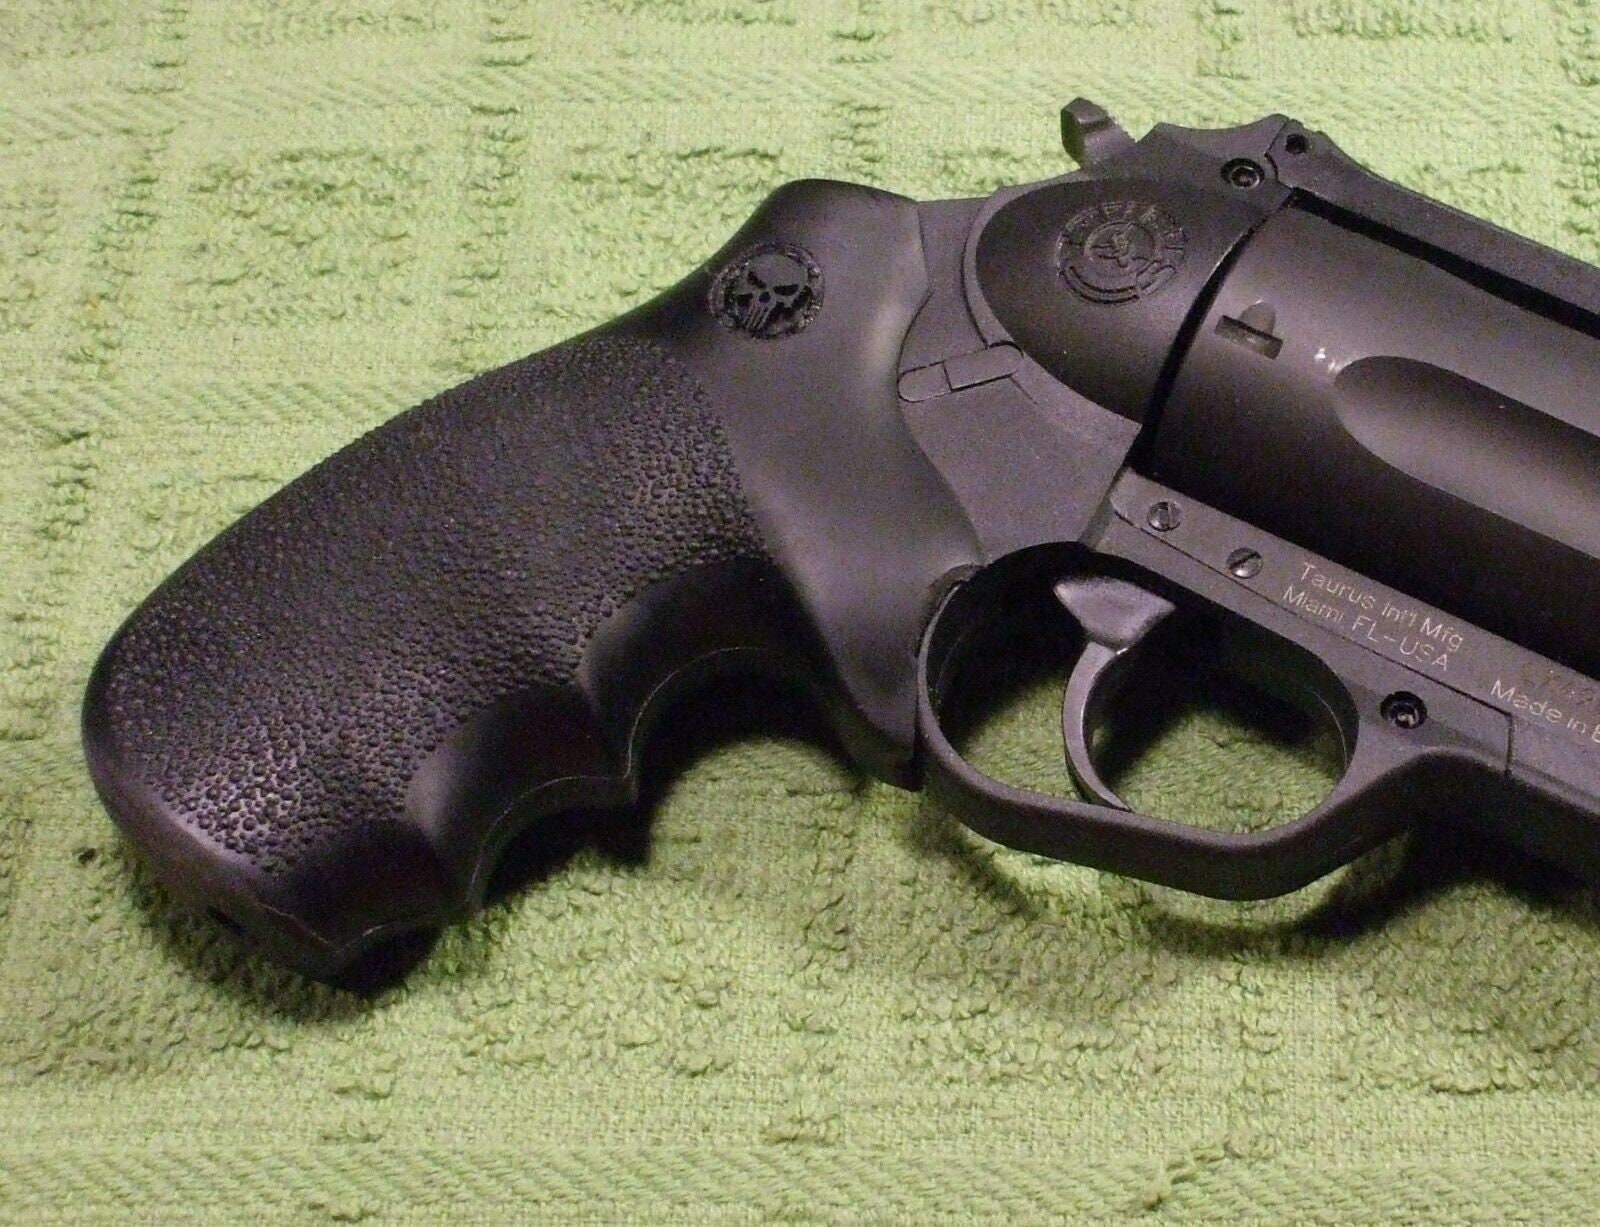 decorative taurus revolver grips